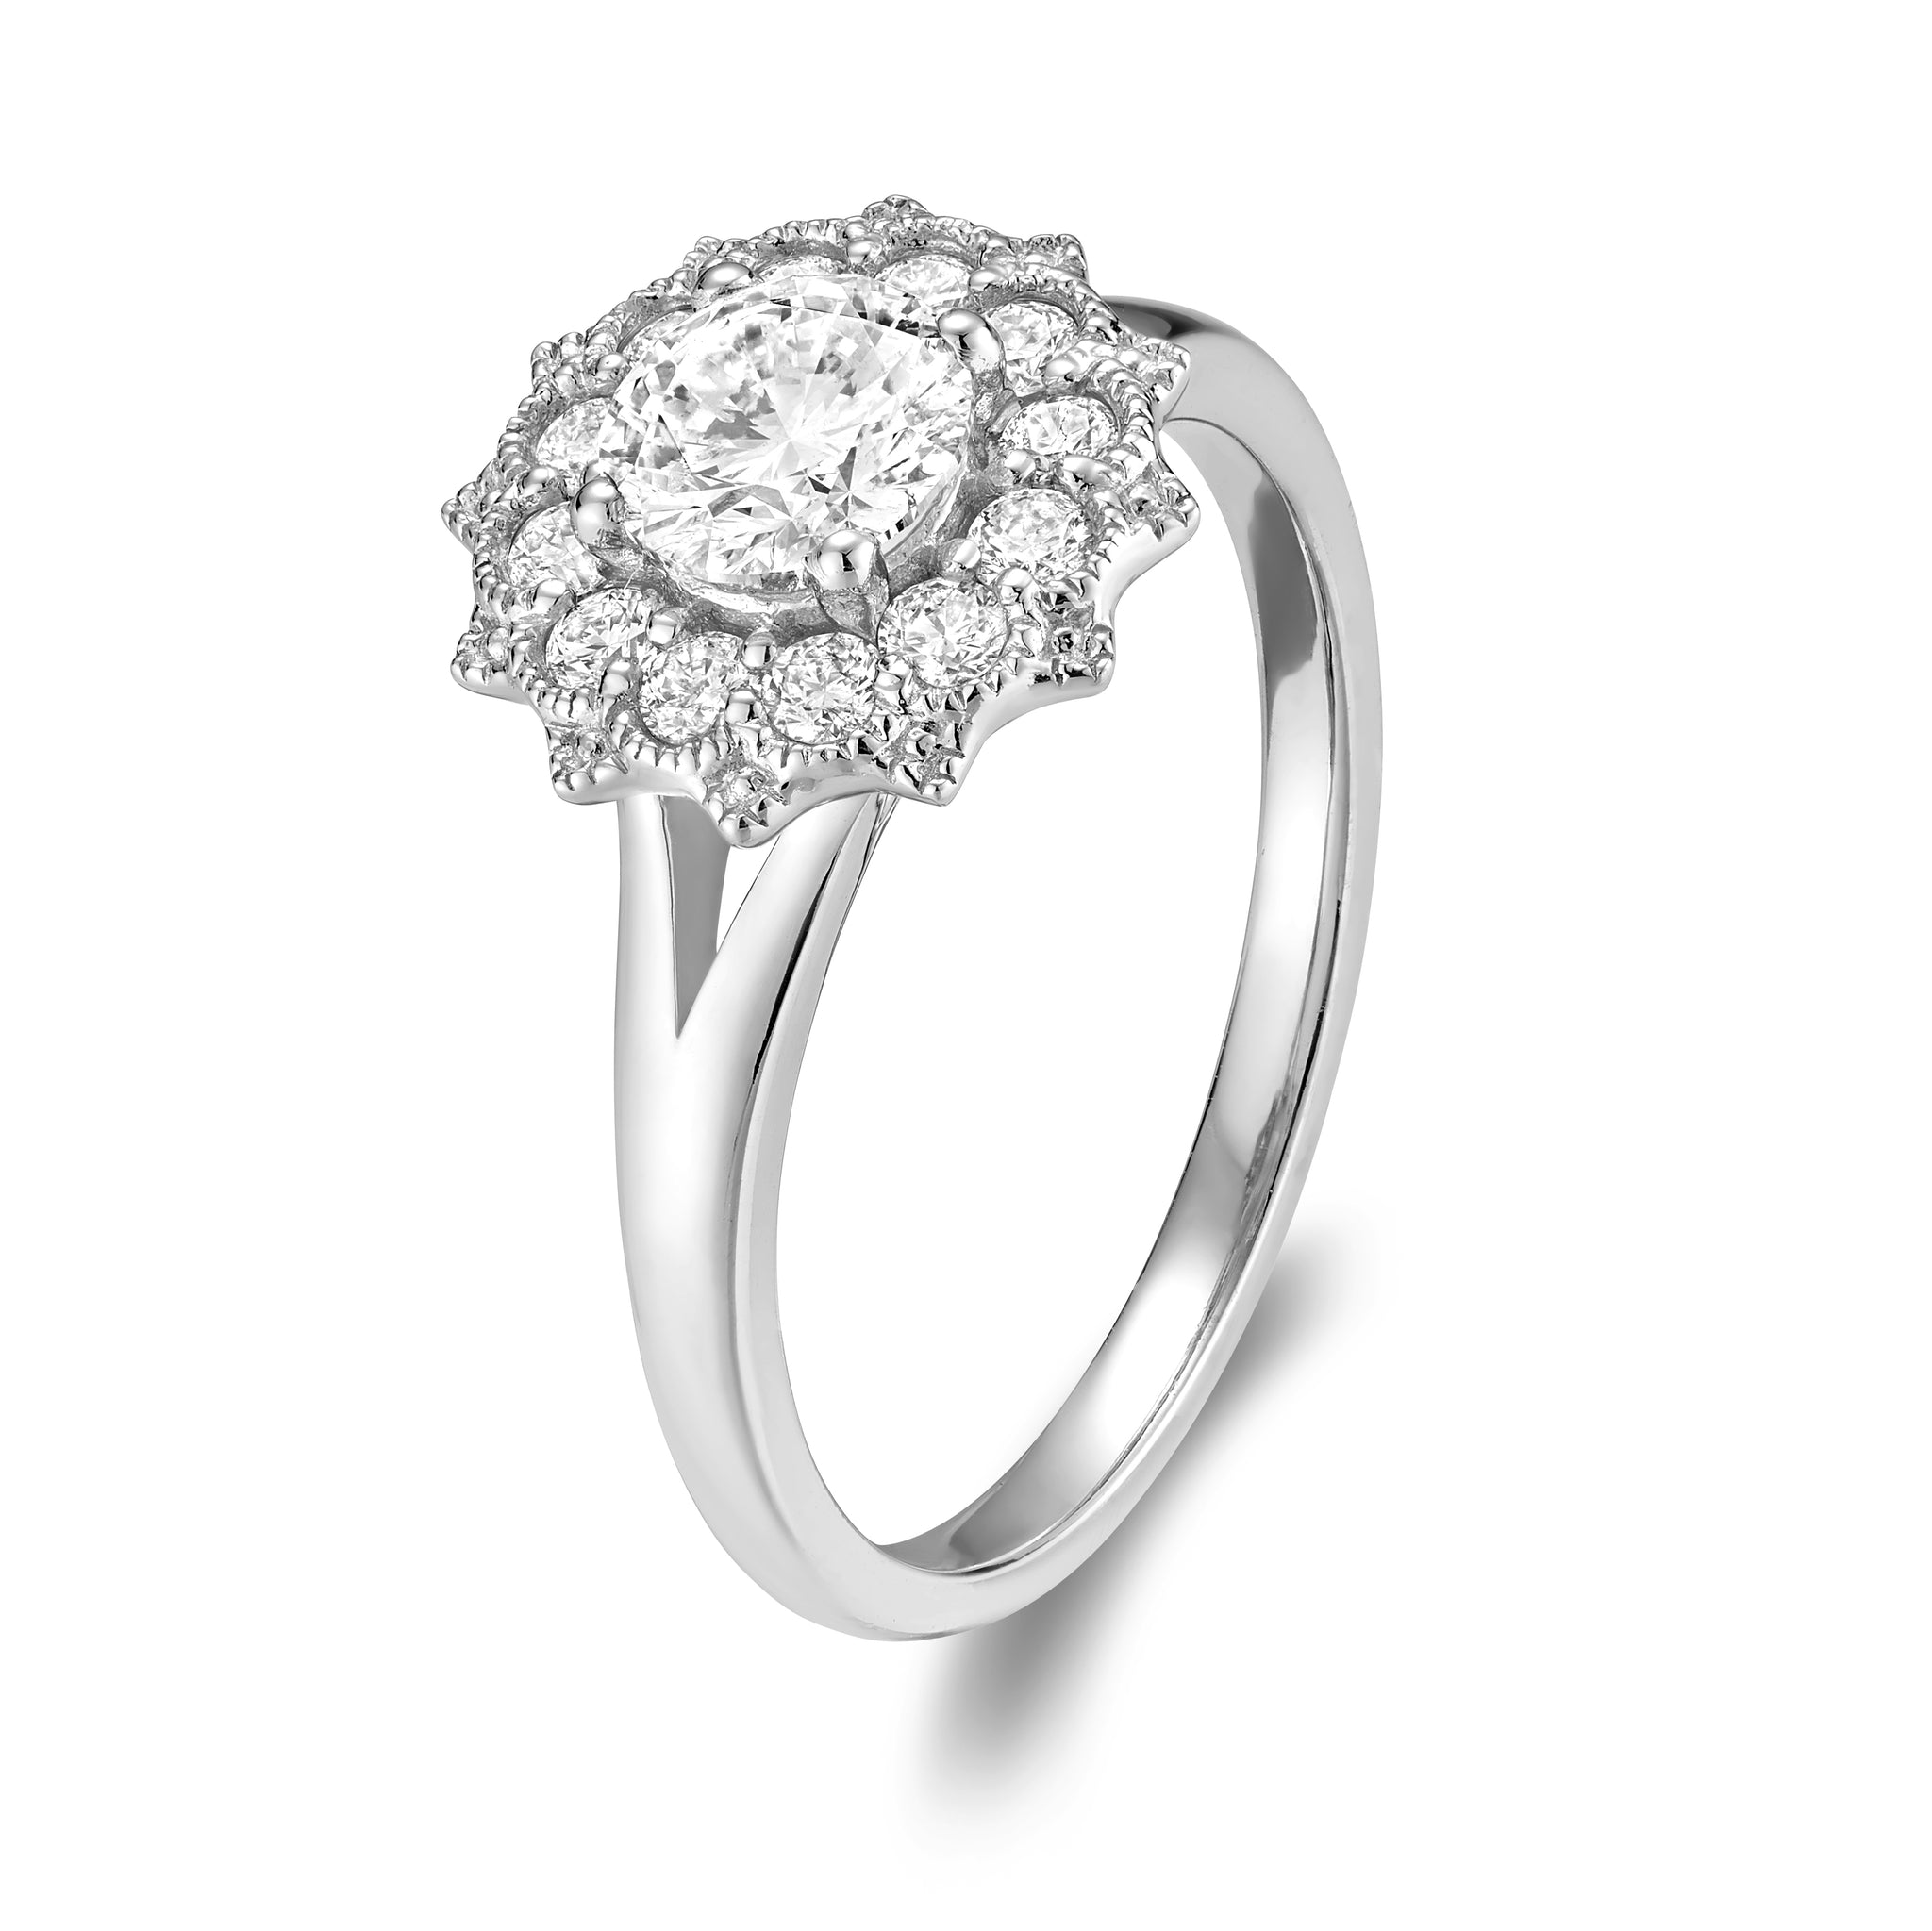 Hemsleys Collection 14K Diamond Star Halo Engagement Ring